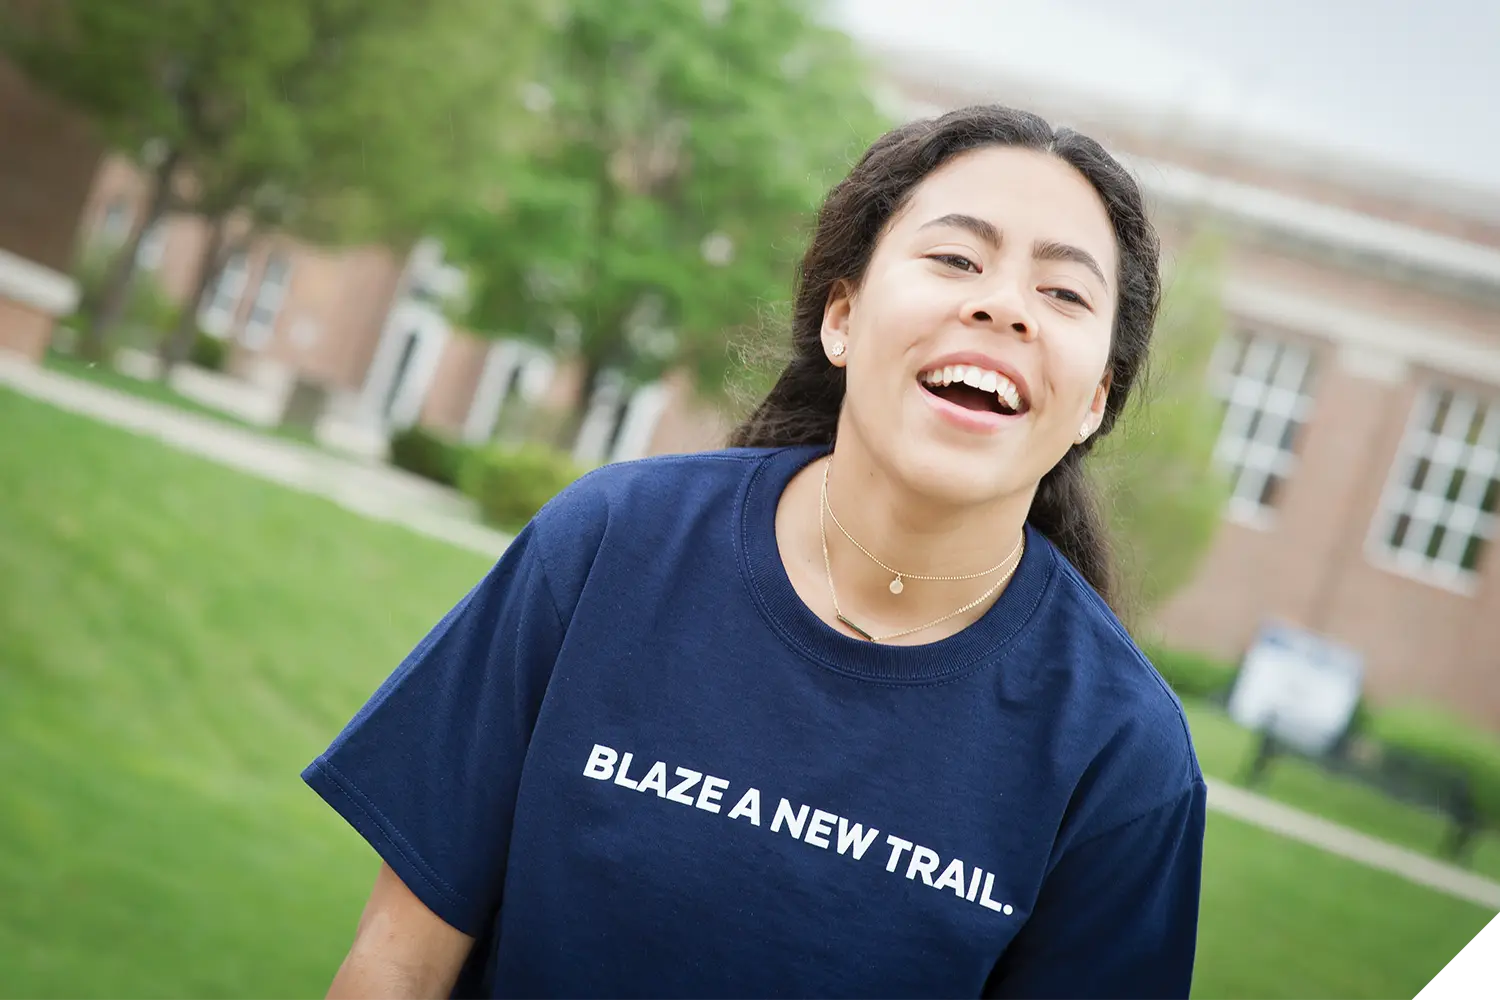 A Marietta College student wearing a shirt that reads "BLAZE A NEW TRAIL."